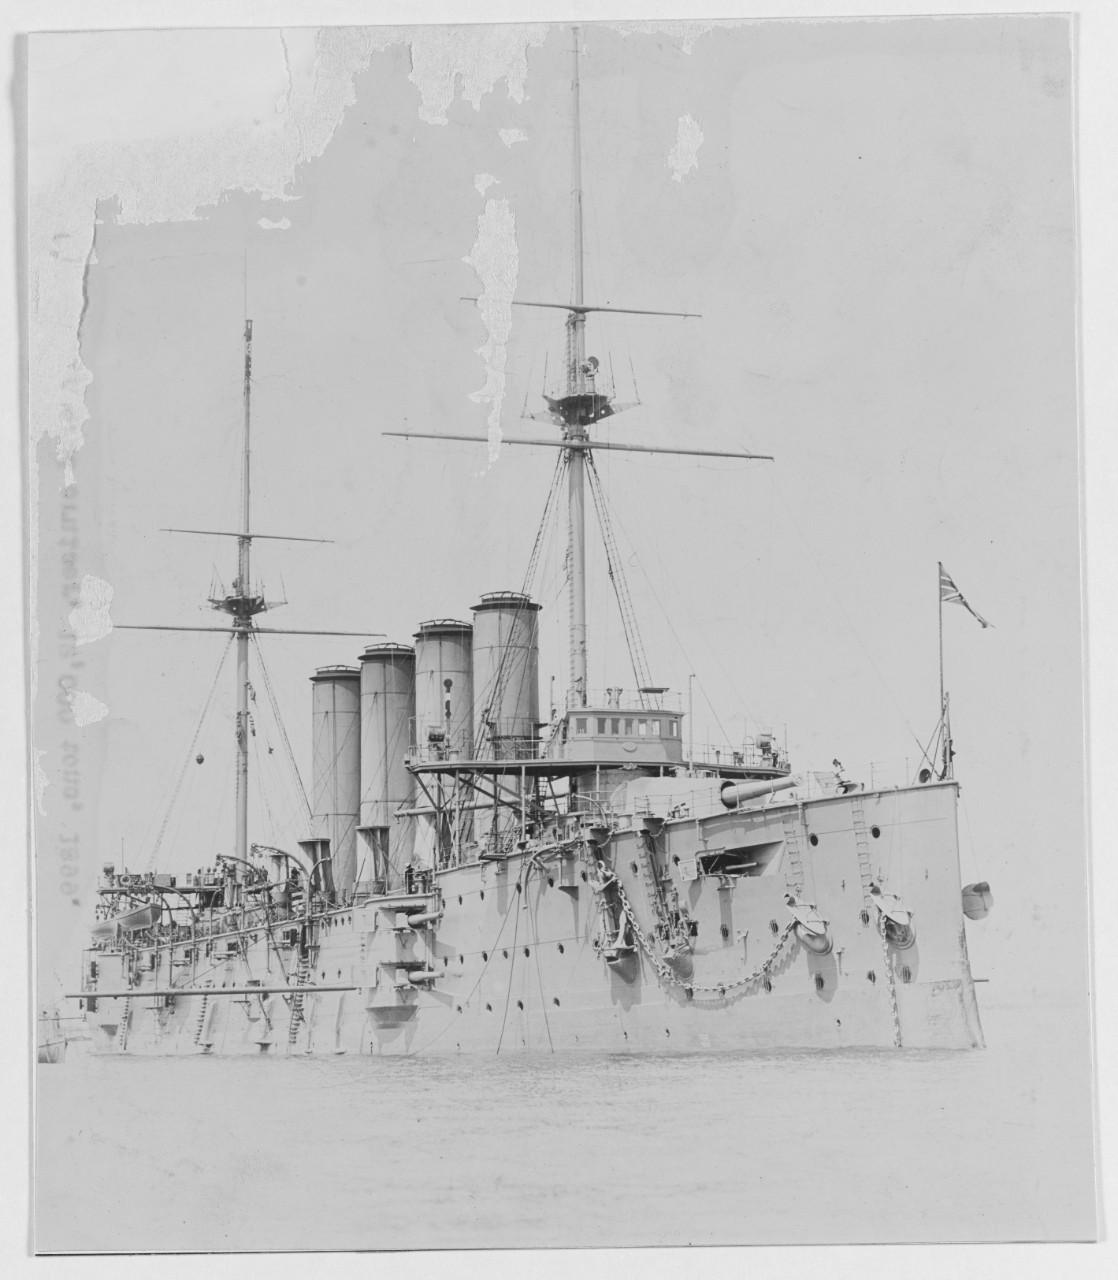 SUTLEJ (British Armored cruiser, 1899-1921)